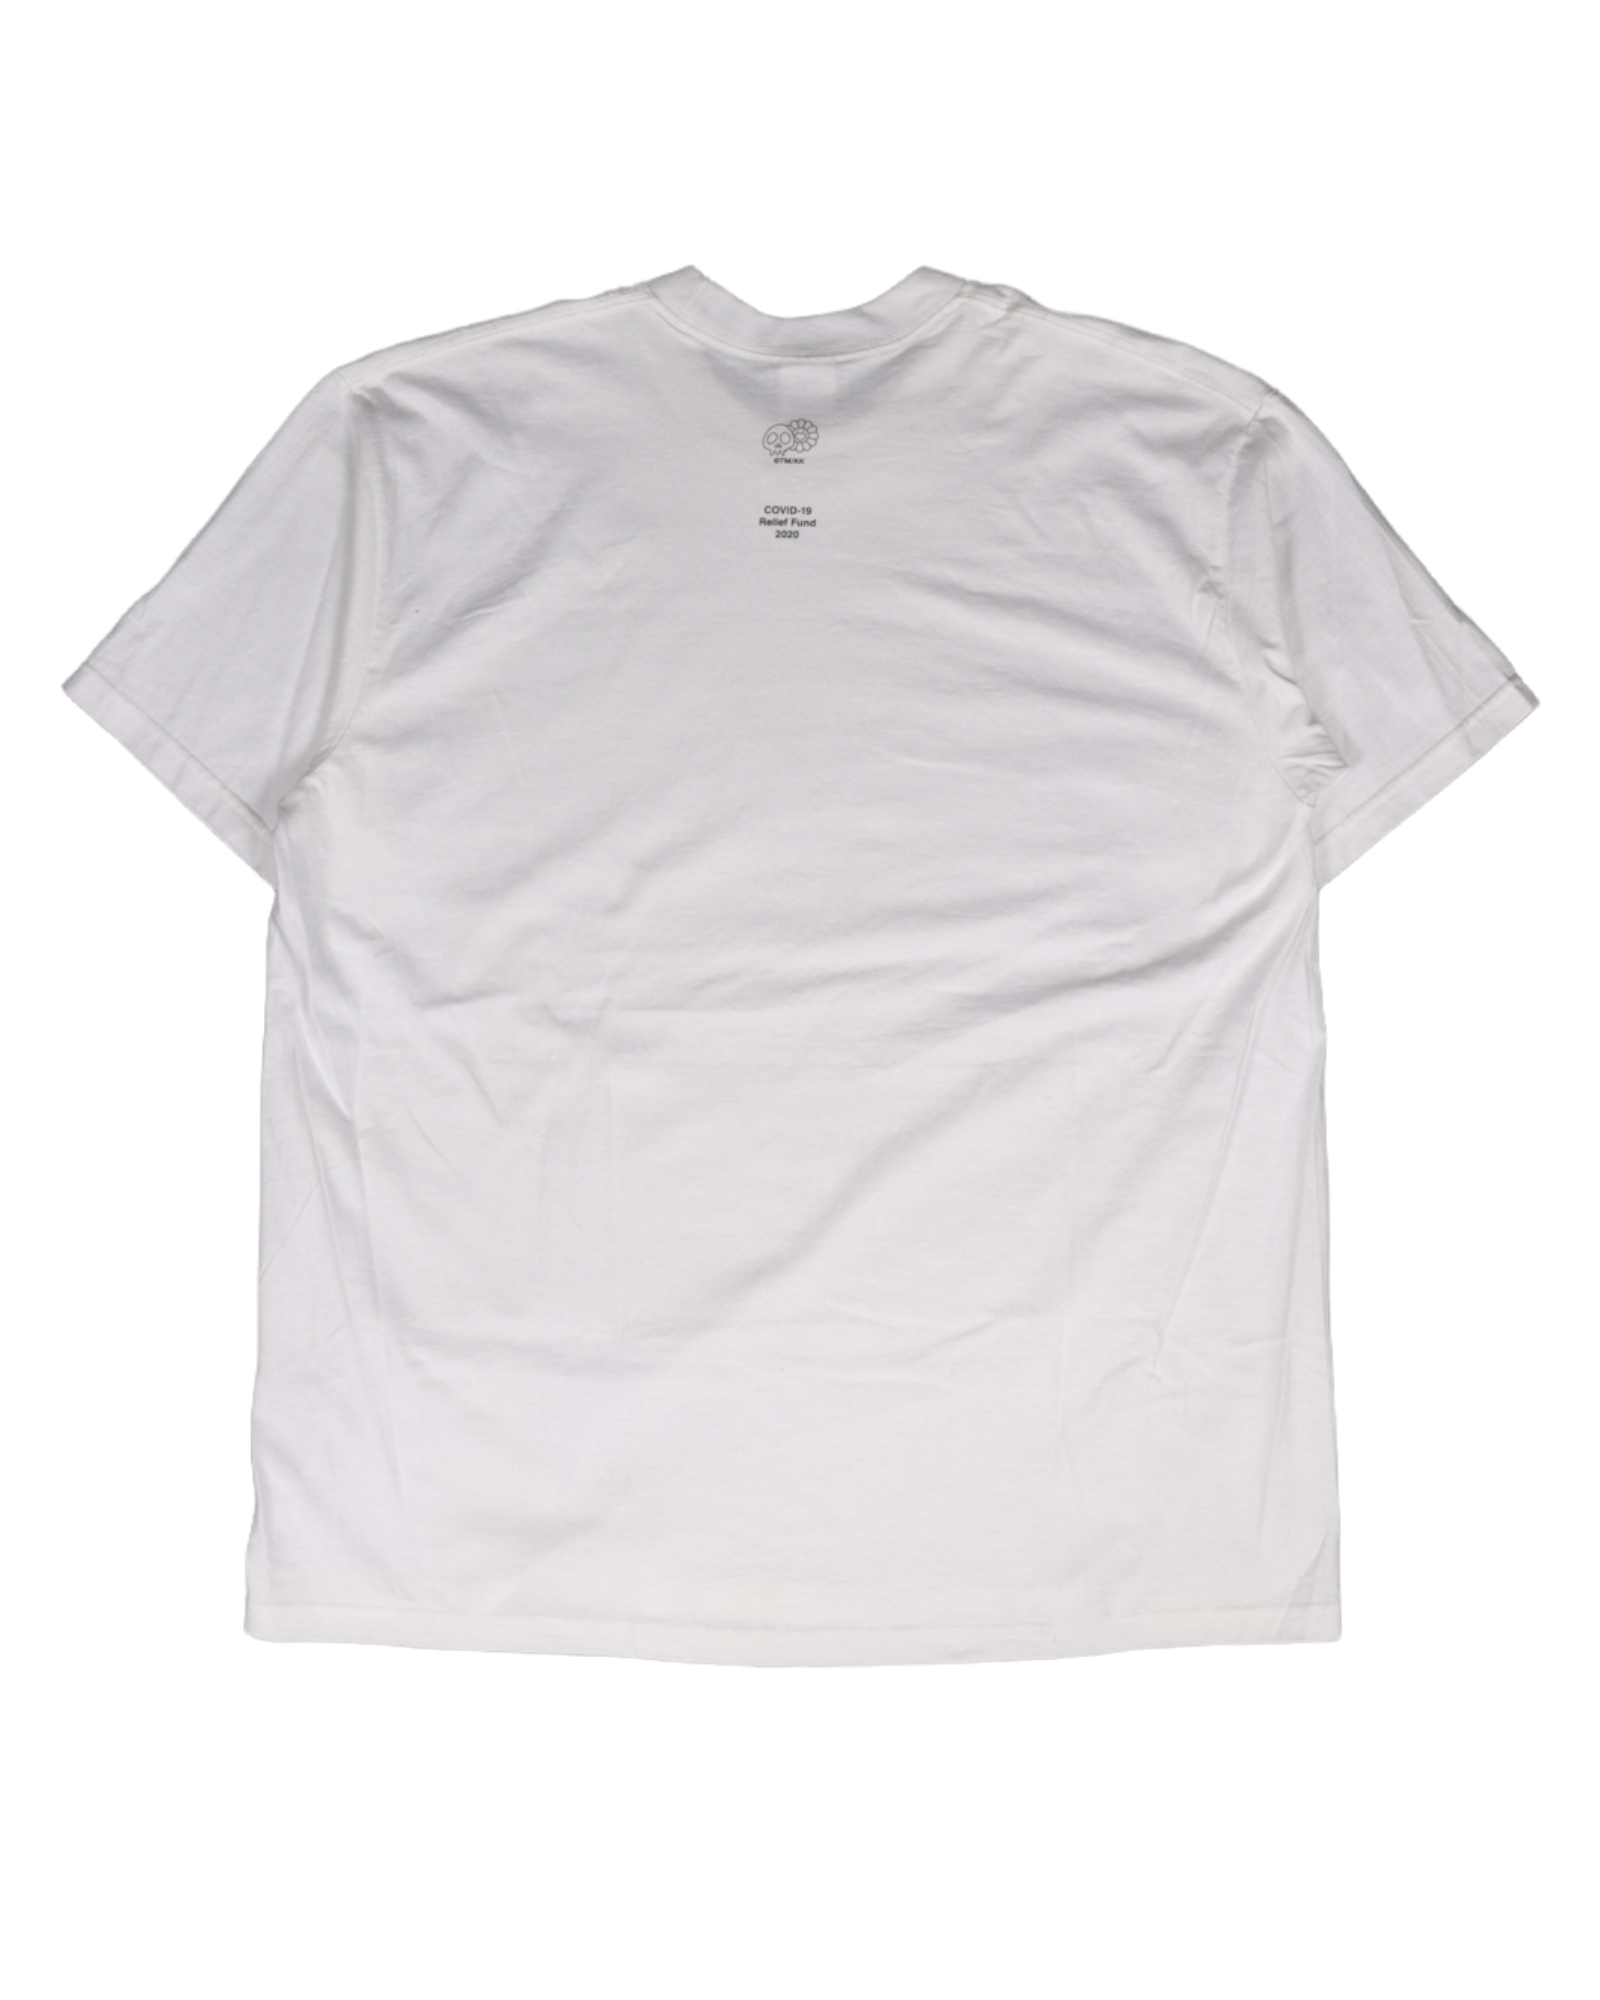 Covid Relief Murakami Box Logo T-Shirt